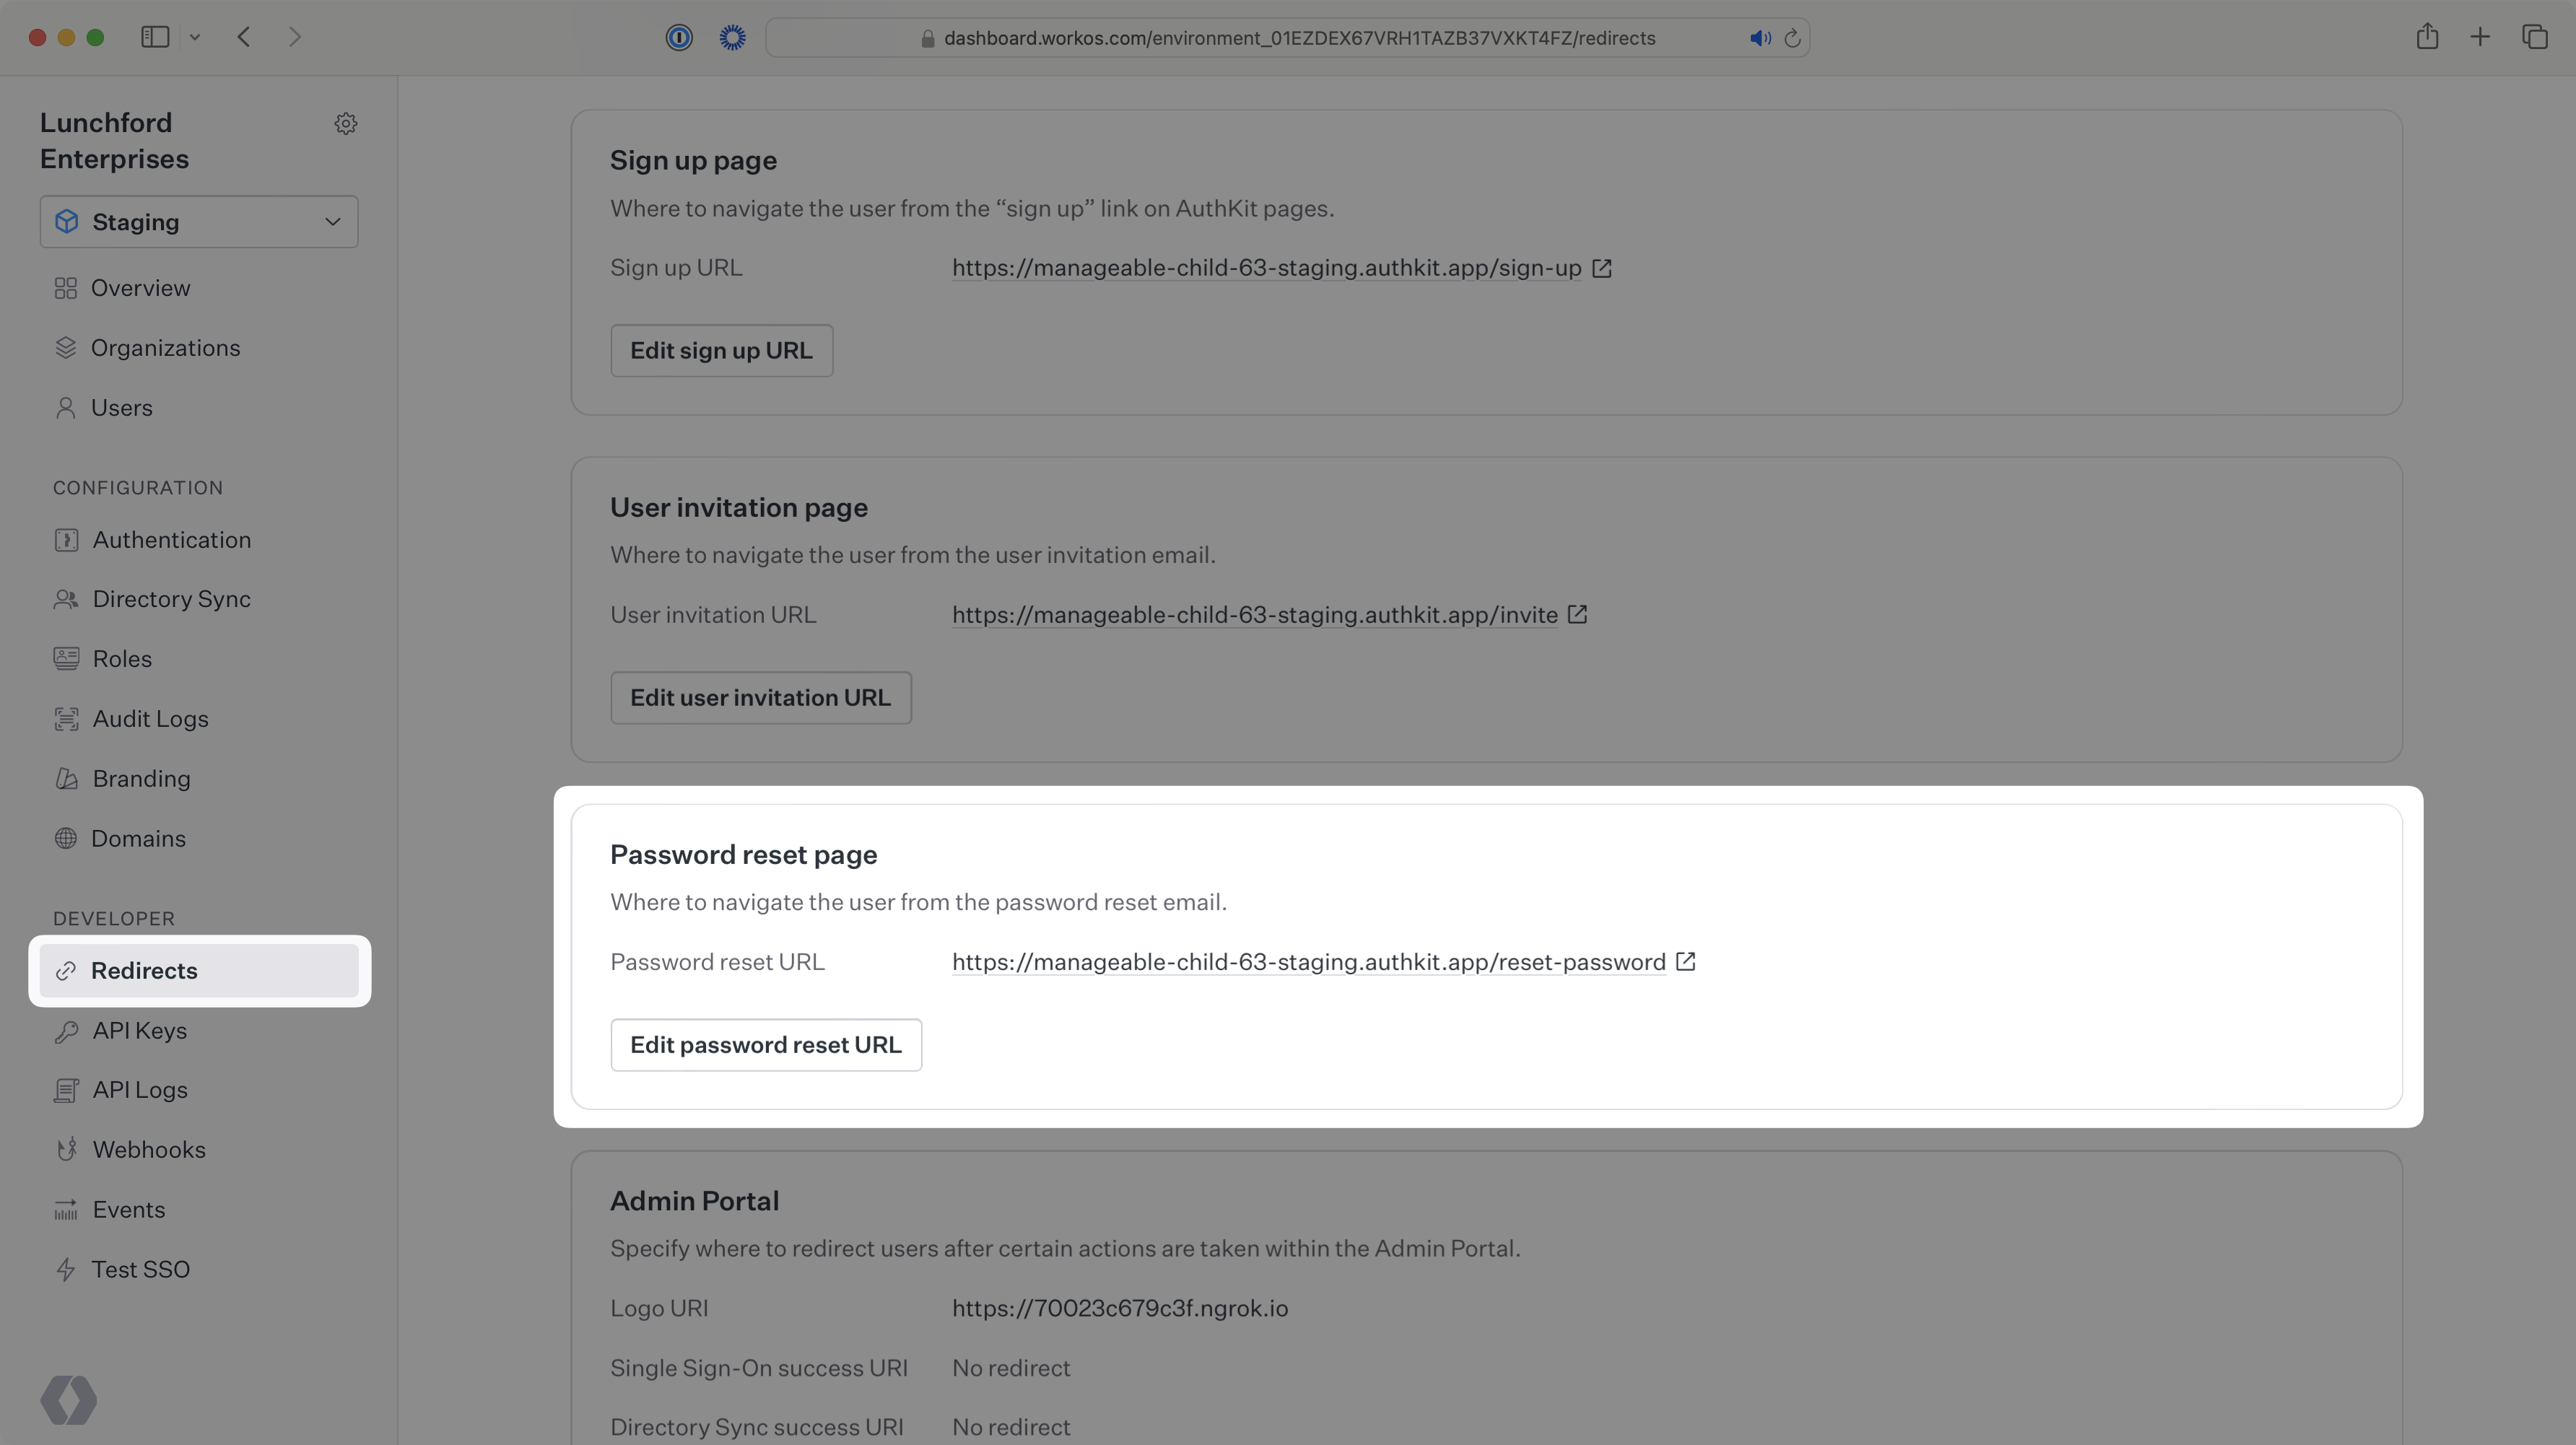 A screenshot showing the WorkOS Dashboard configuration card for password reset URL